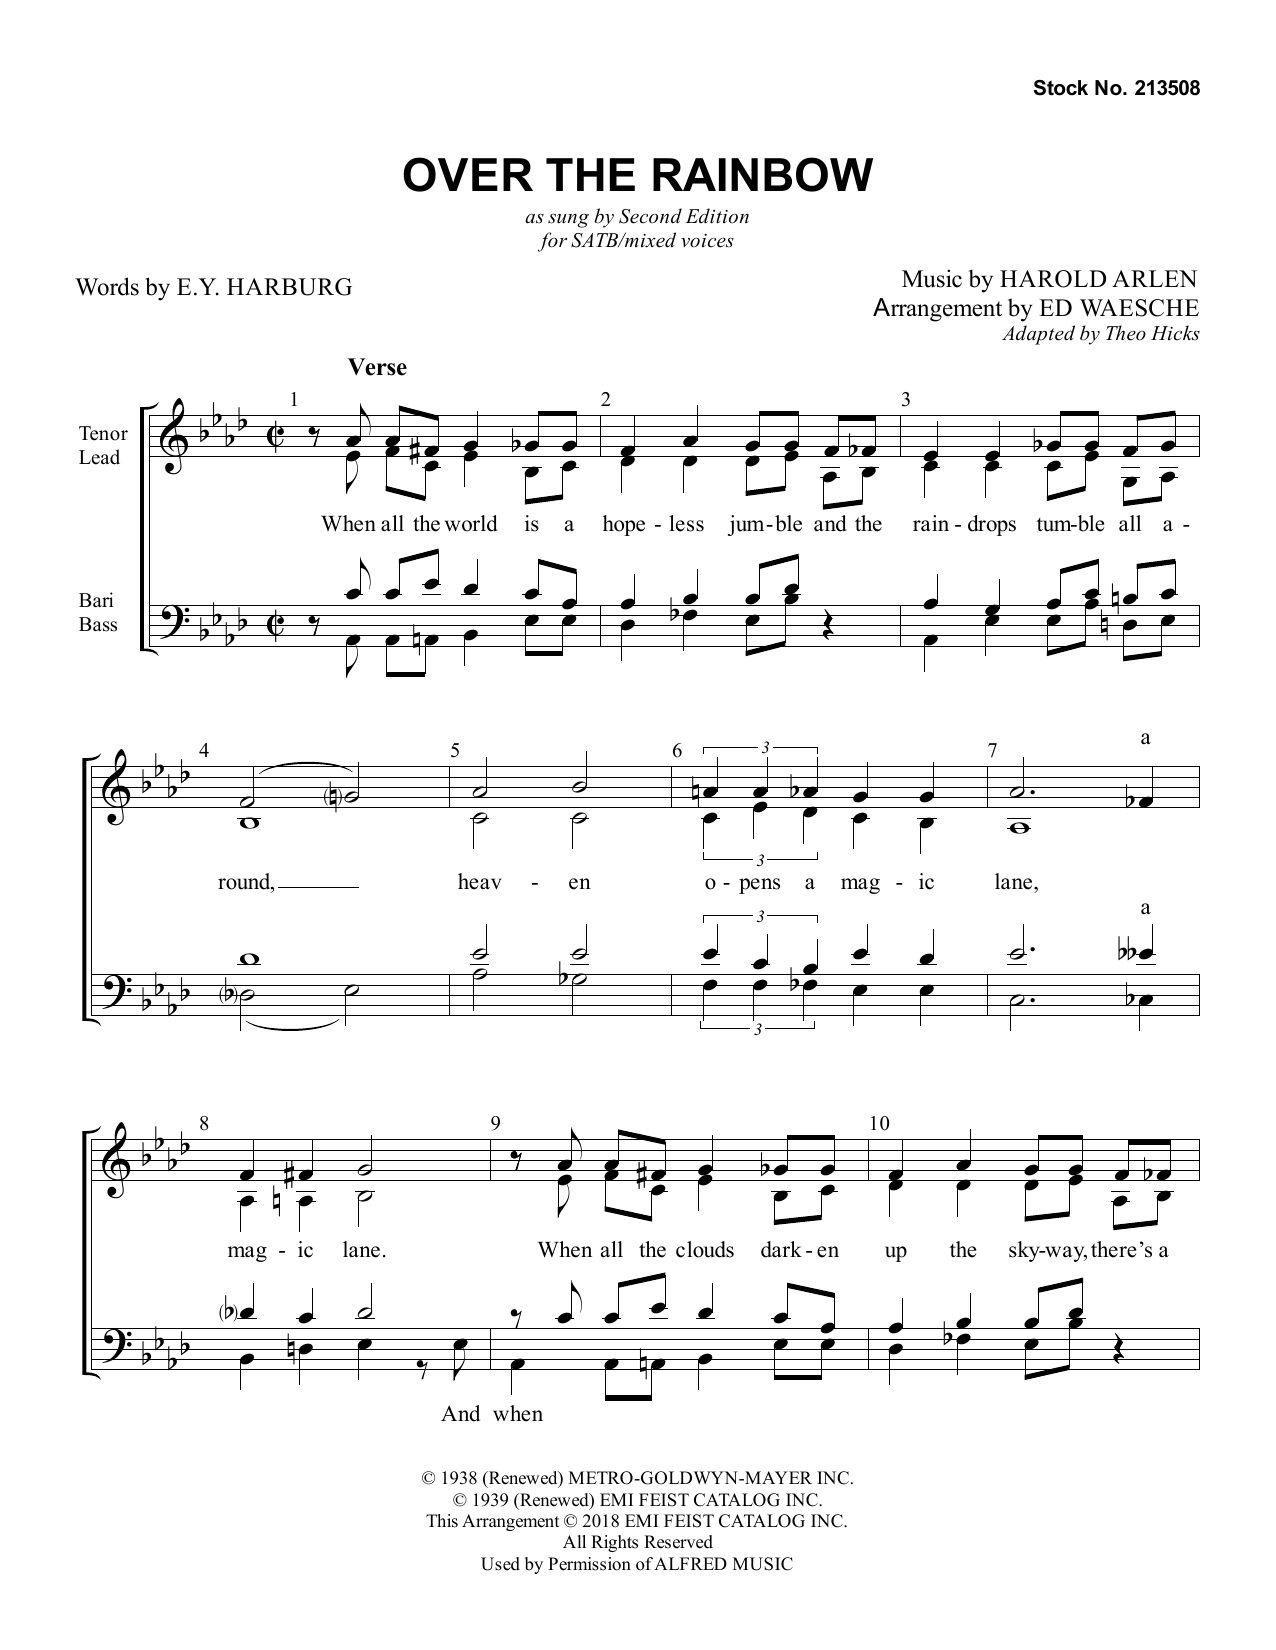 Harold Arlen & E.Y. Harburg Over The Rainbow (arr. Ed Waesche) Sheet Music Notes & Chords for SATB Choir - Download or Print PDF